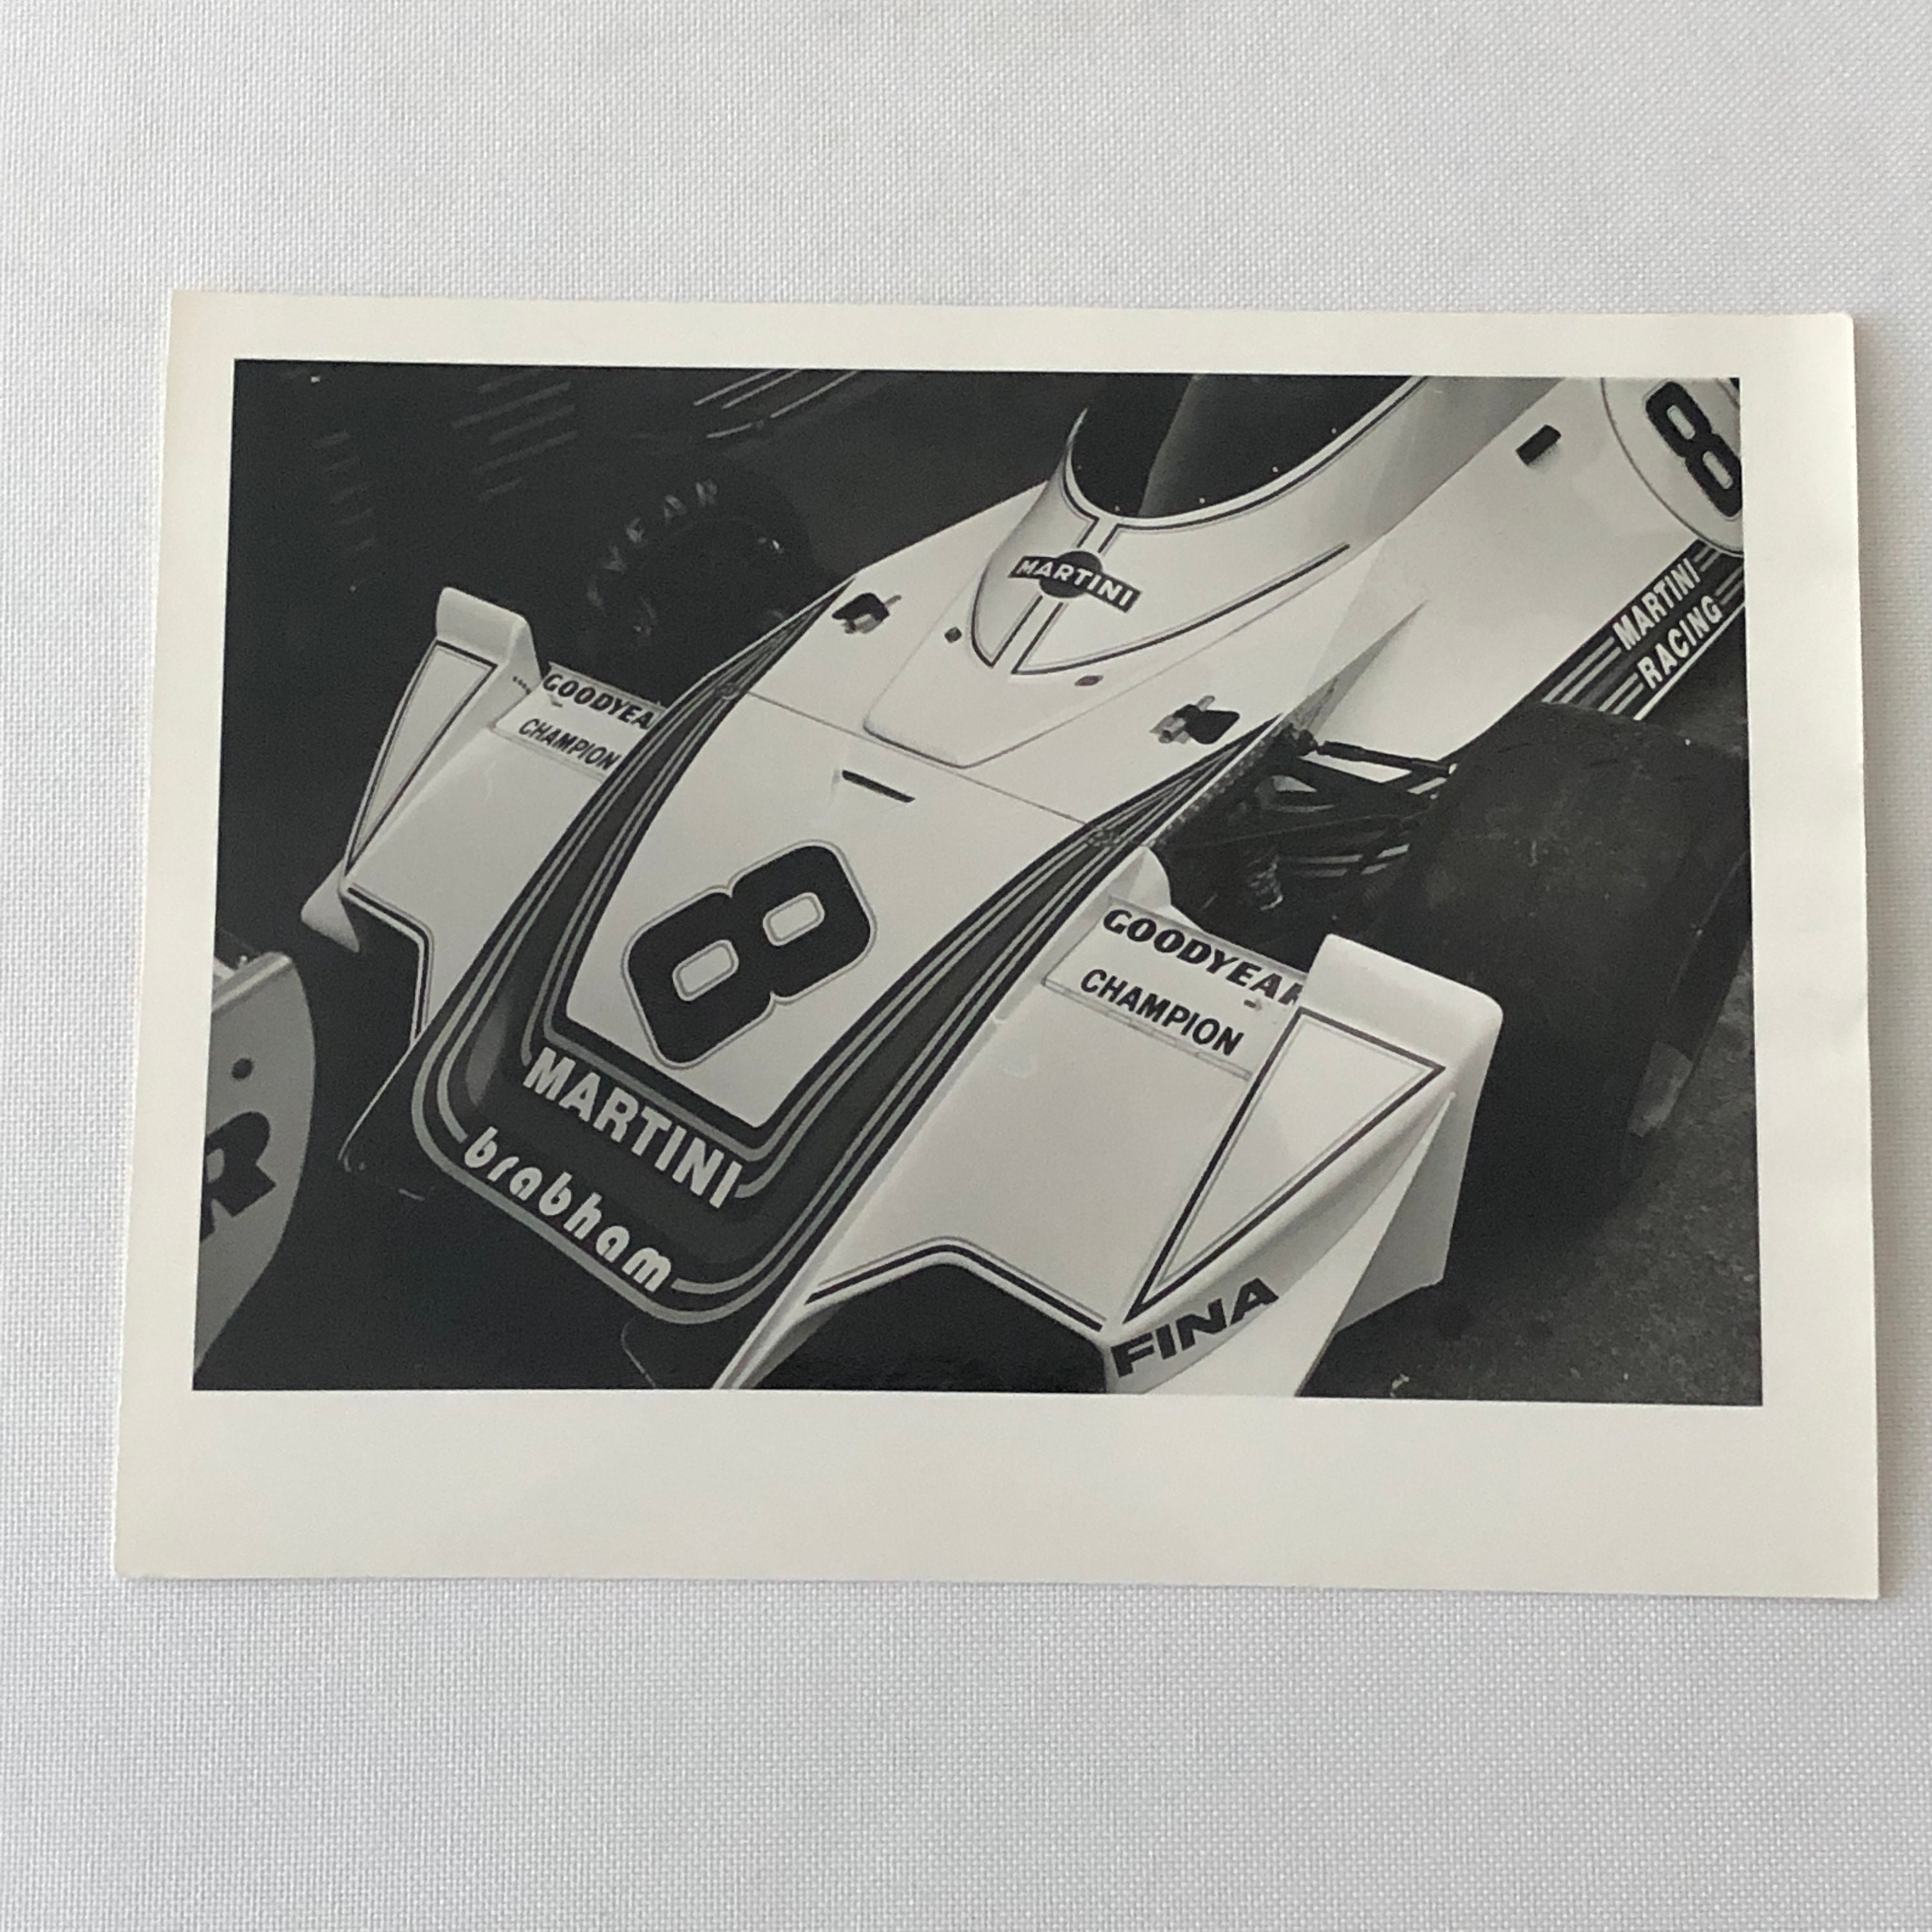 Vintage 1975 Brabham Martini Racing Car Photo Photograph 